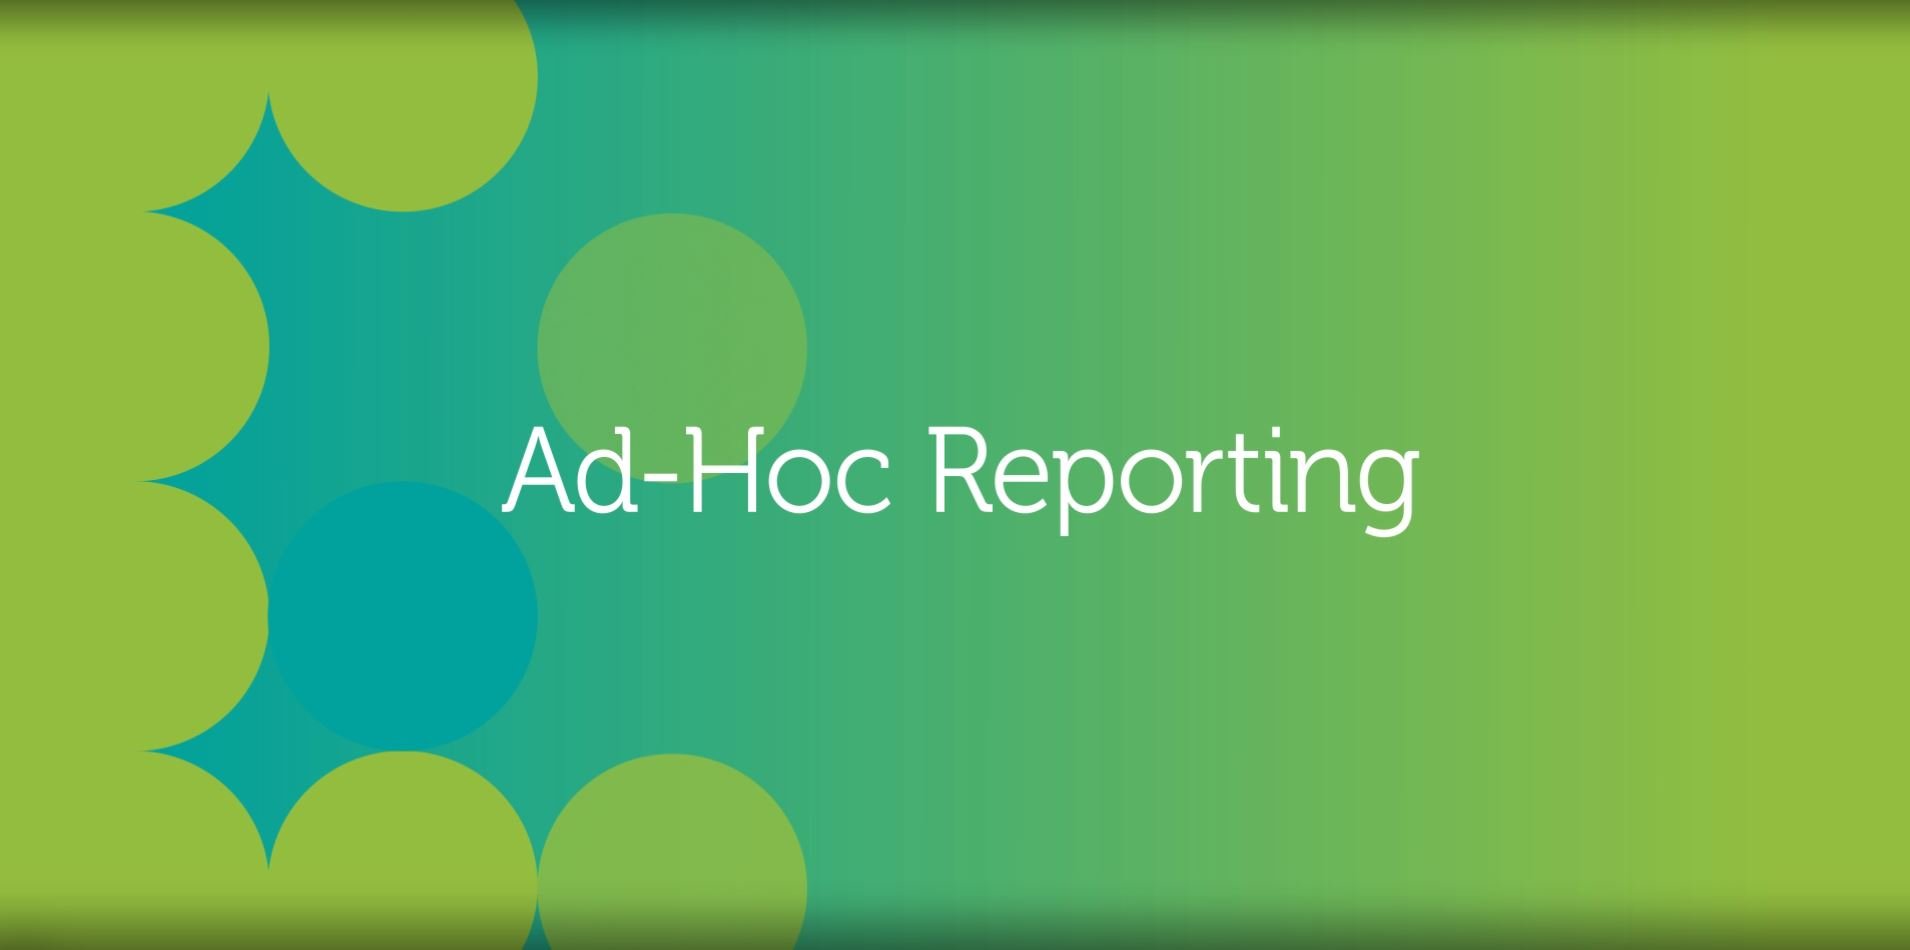 Ad-hoc Reporting